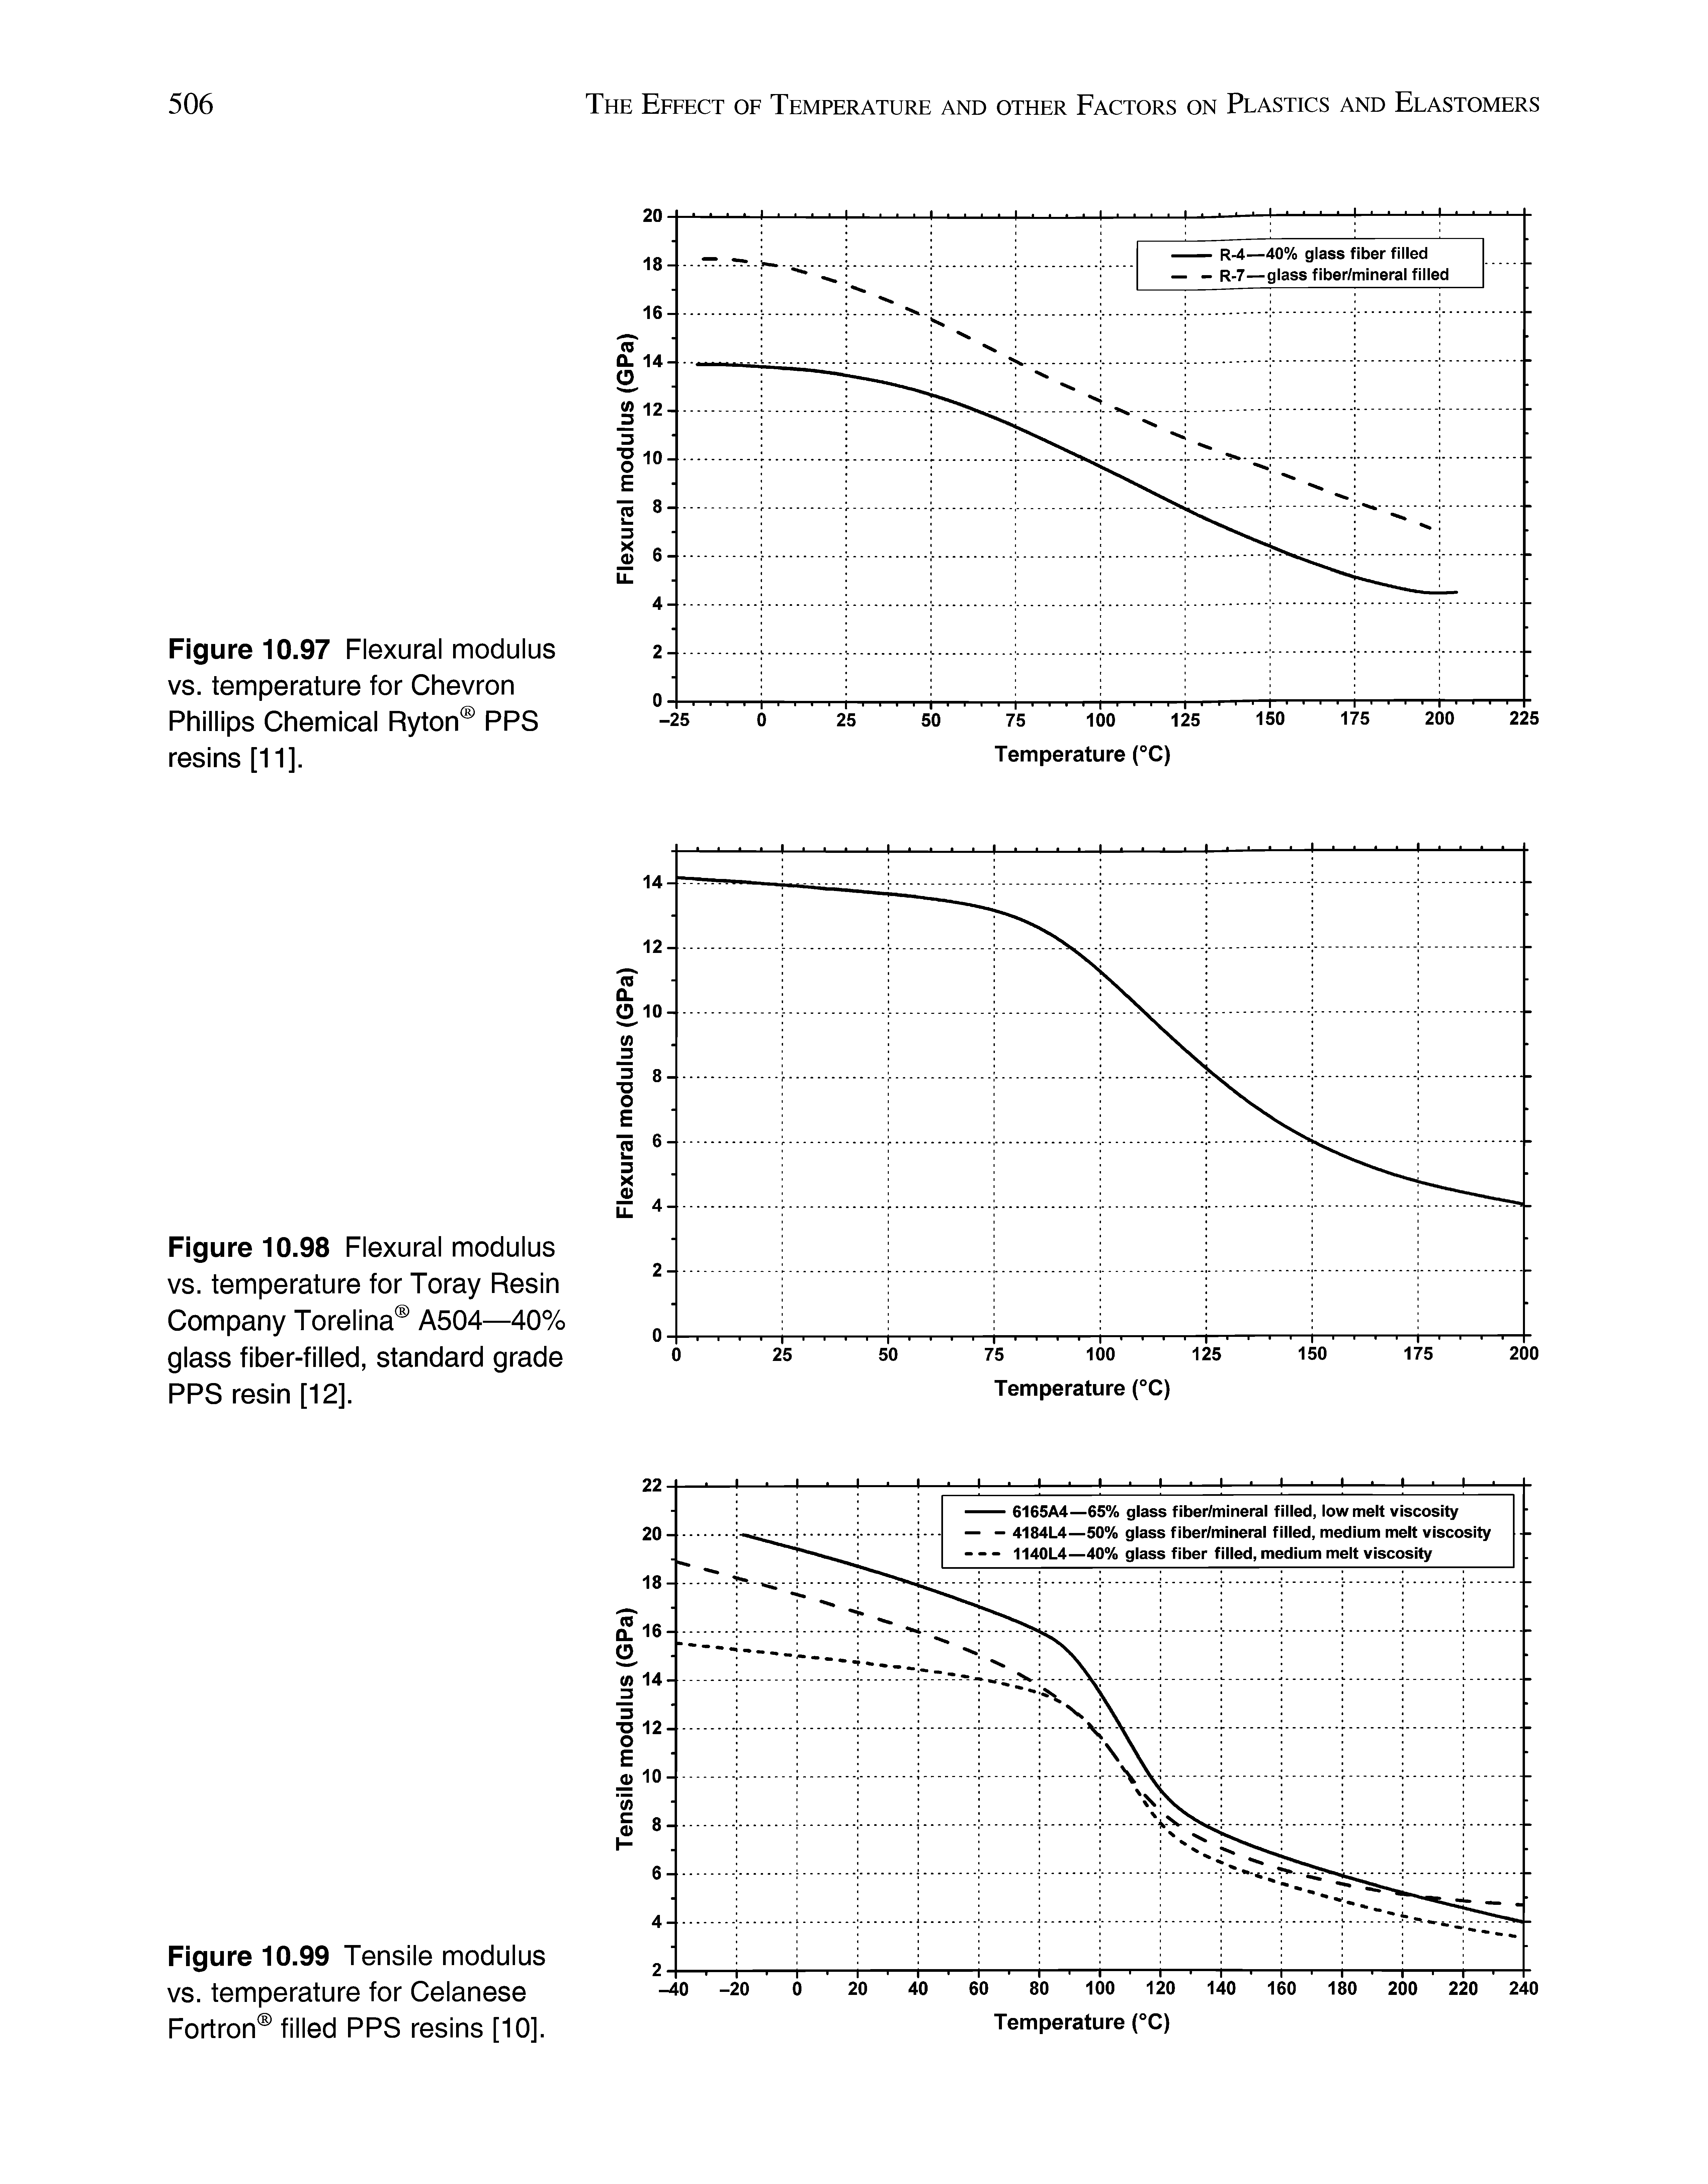 Figure 10.97 Flexural modulus vs. temperature for Chevron Phillips Chemical Ryton PPS resins [11].